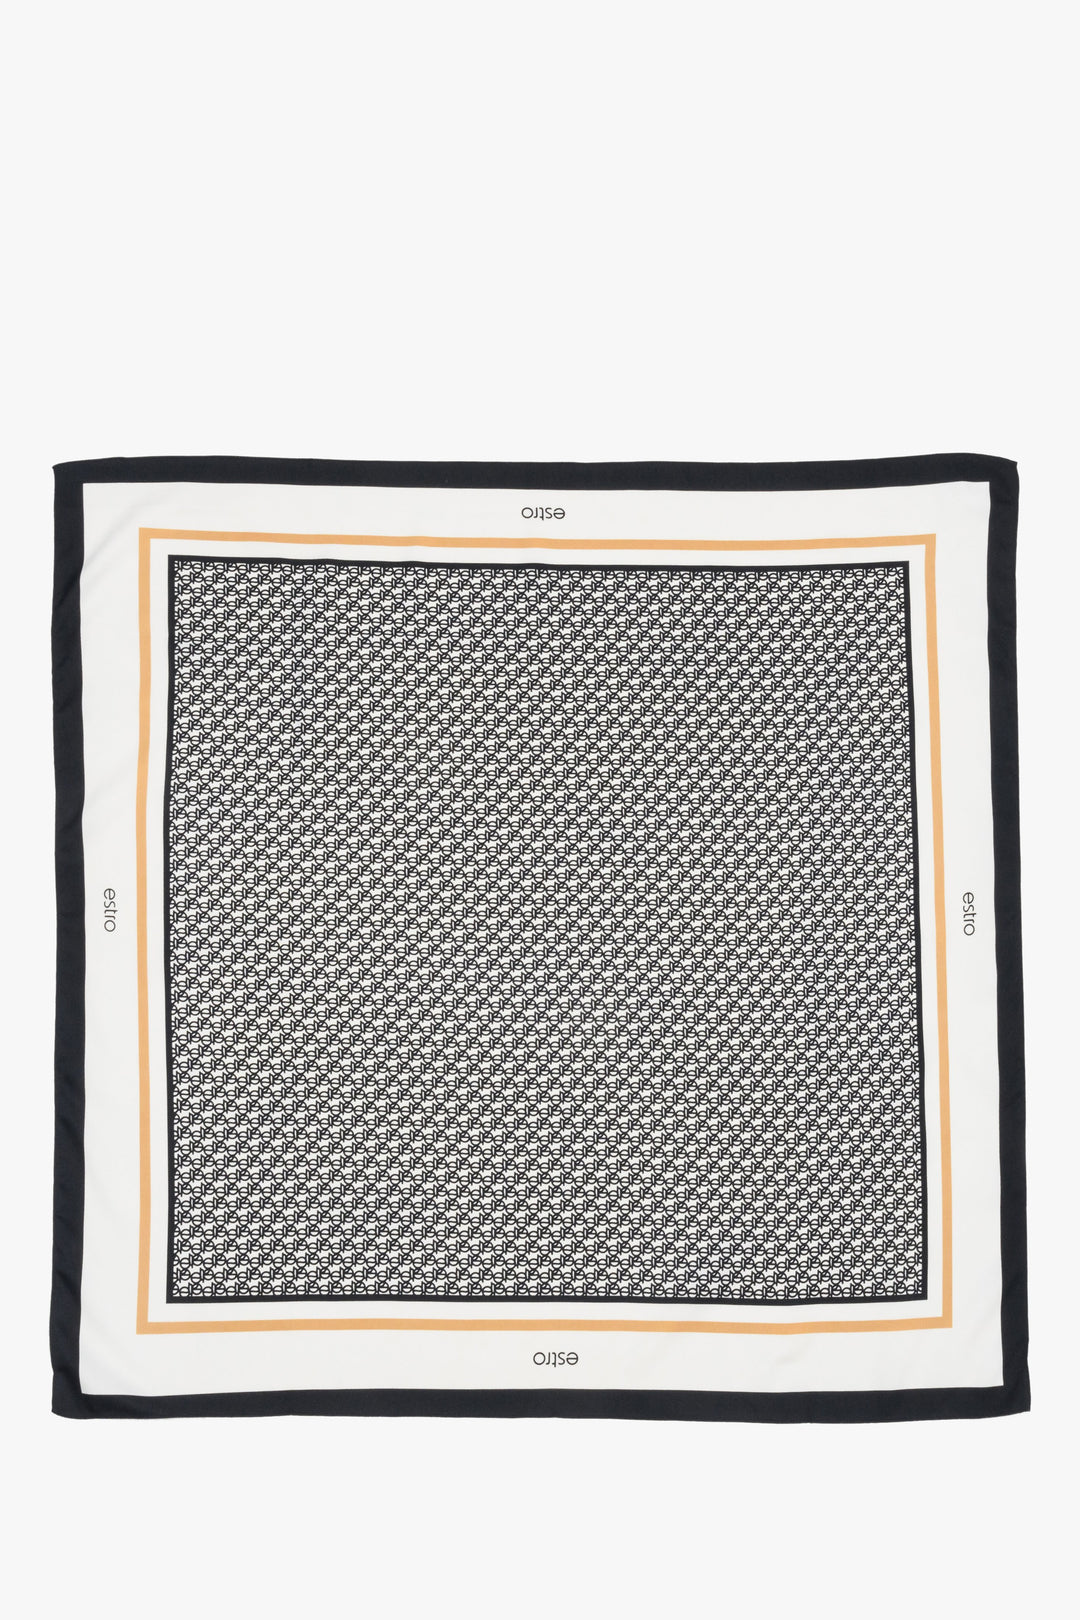 Estro neckerchief with a pattern in white, black, and beige colours.